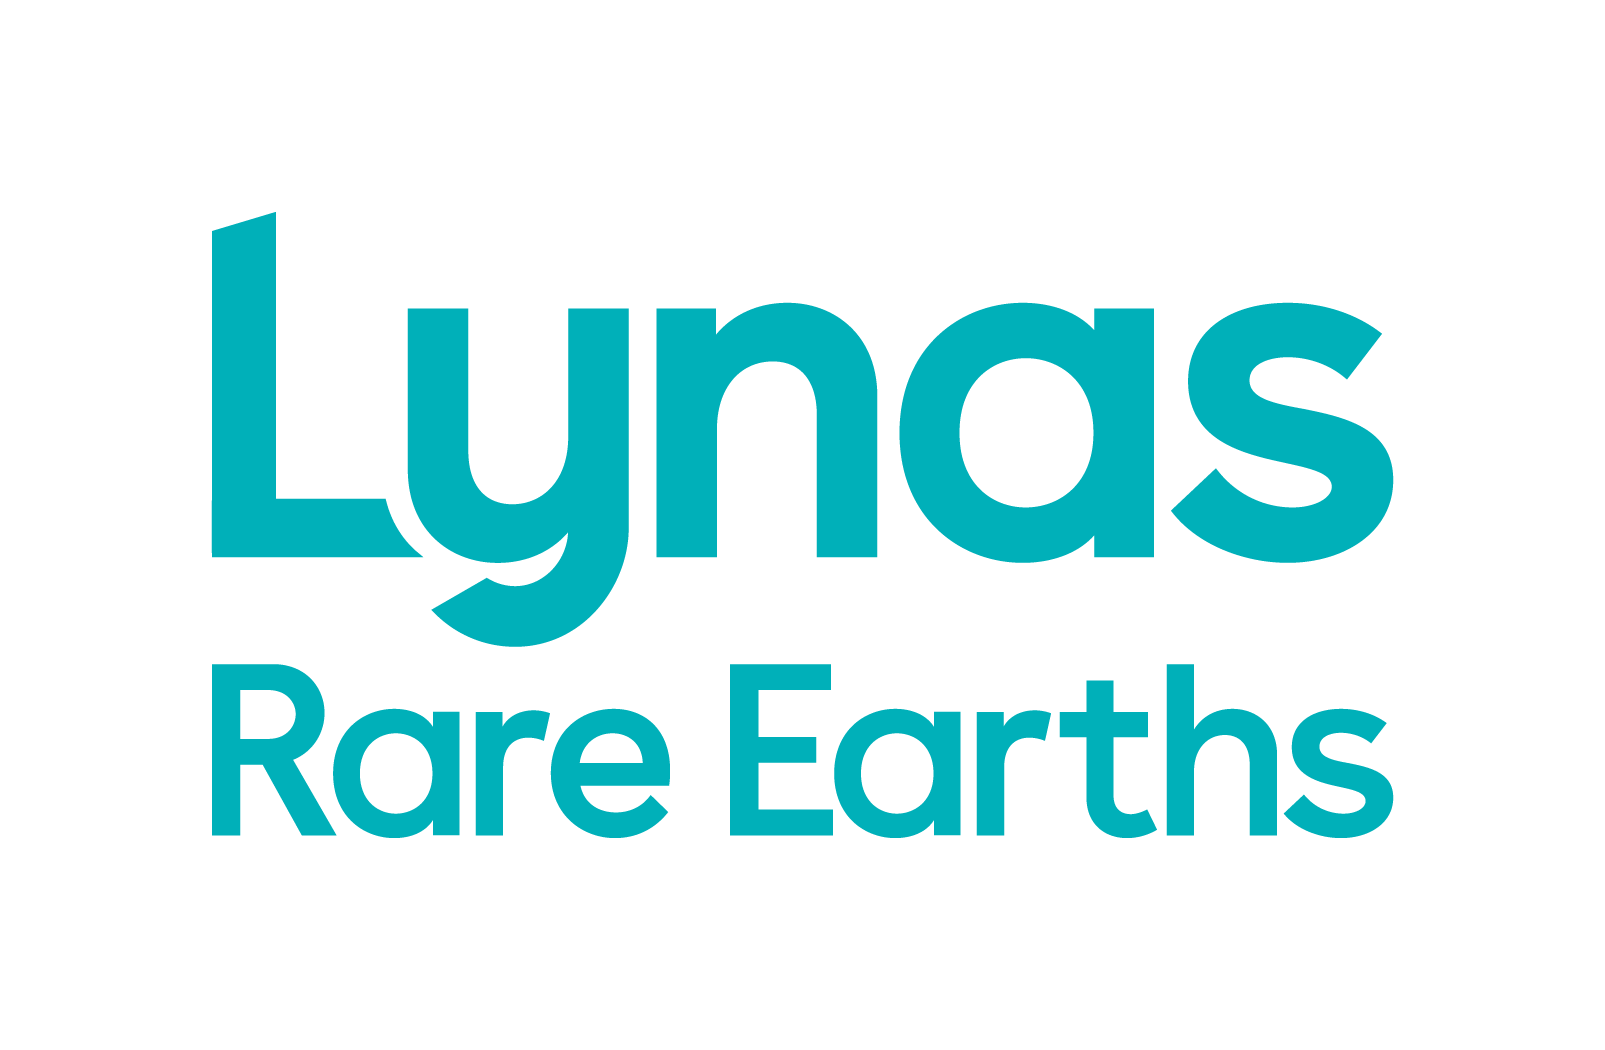 Lynas Rare Earths